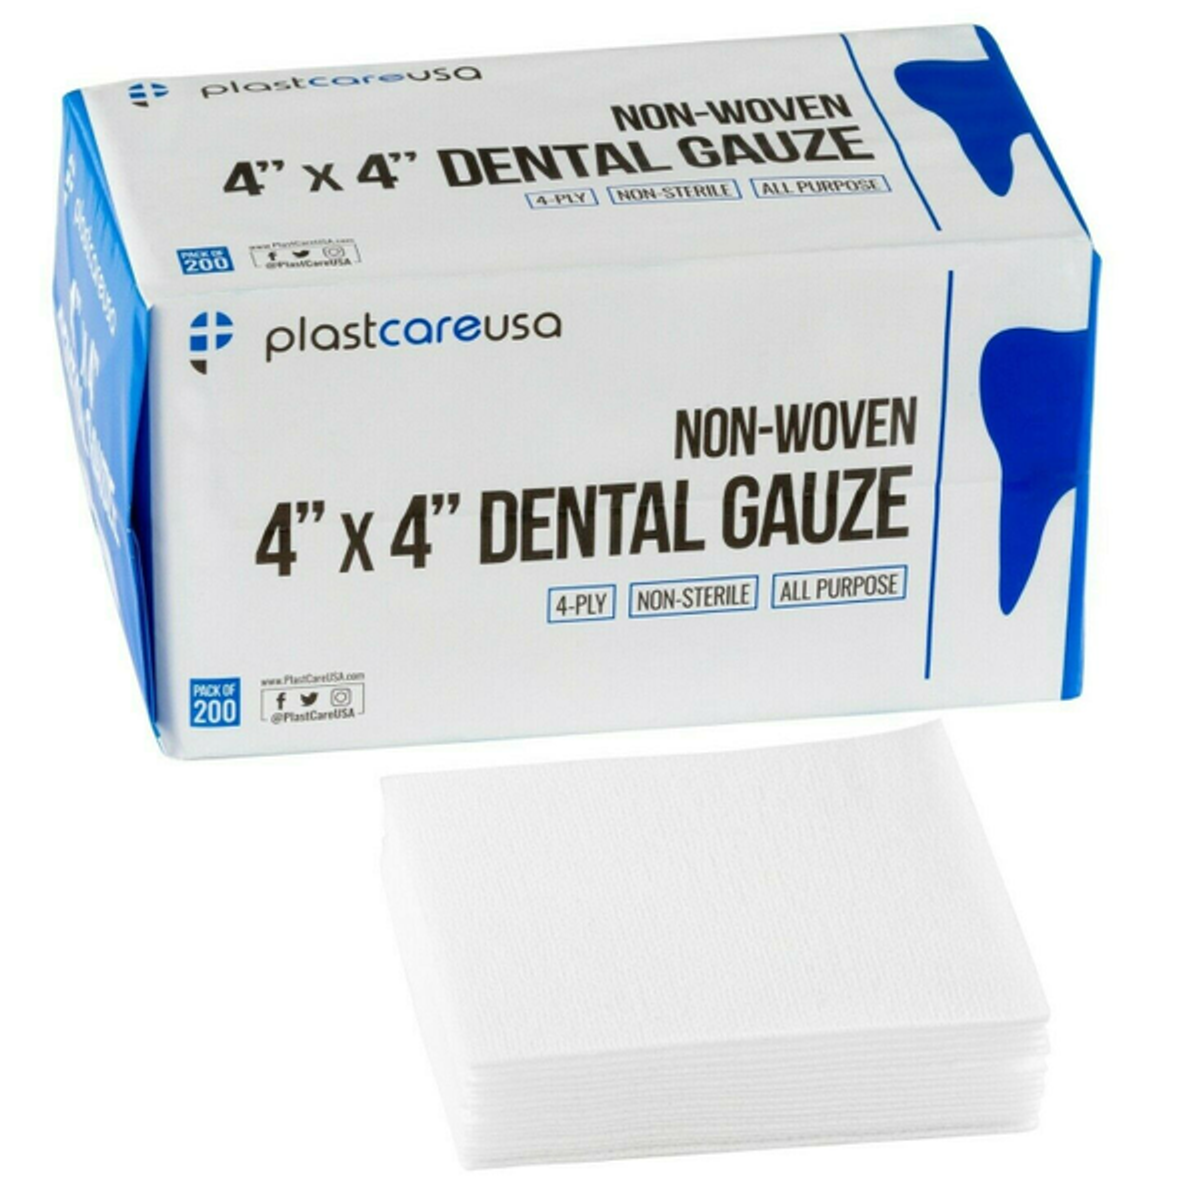 PlastCare Non-Woven Dental Gauze Sponges 4x4, 4-Ply